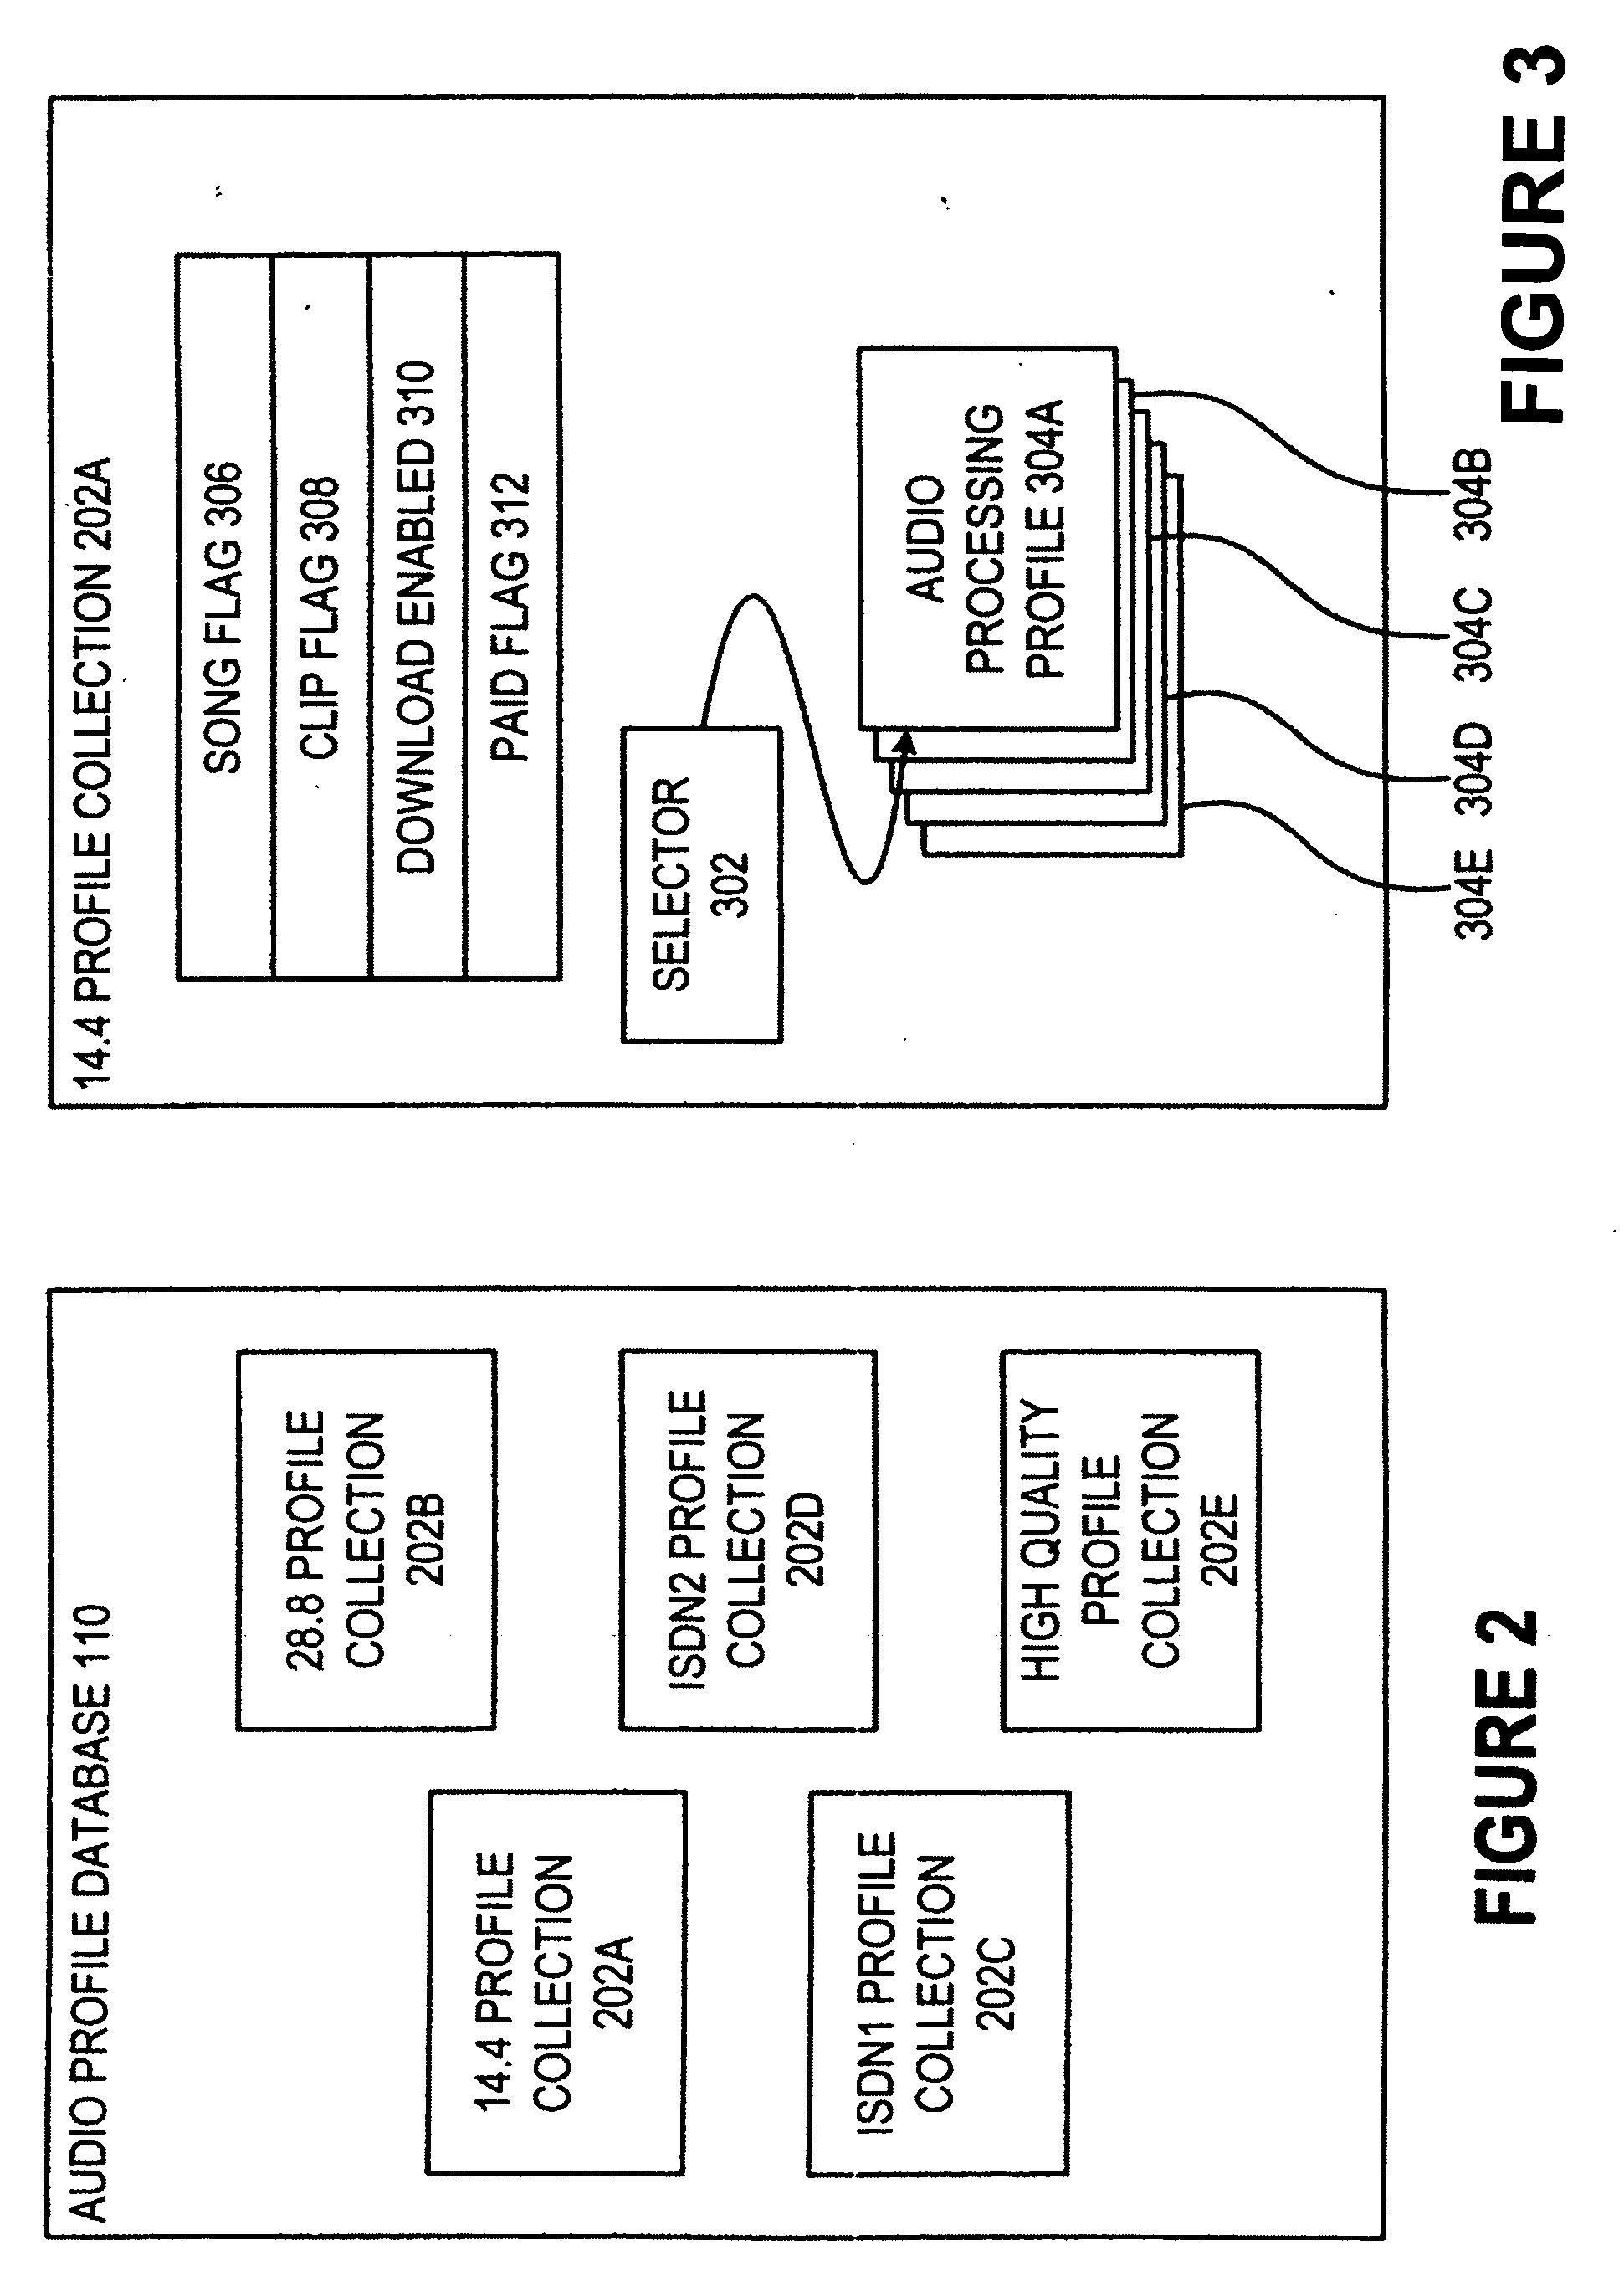 Digital audio signal filtering mechanism and method